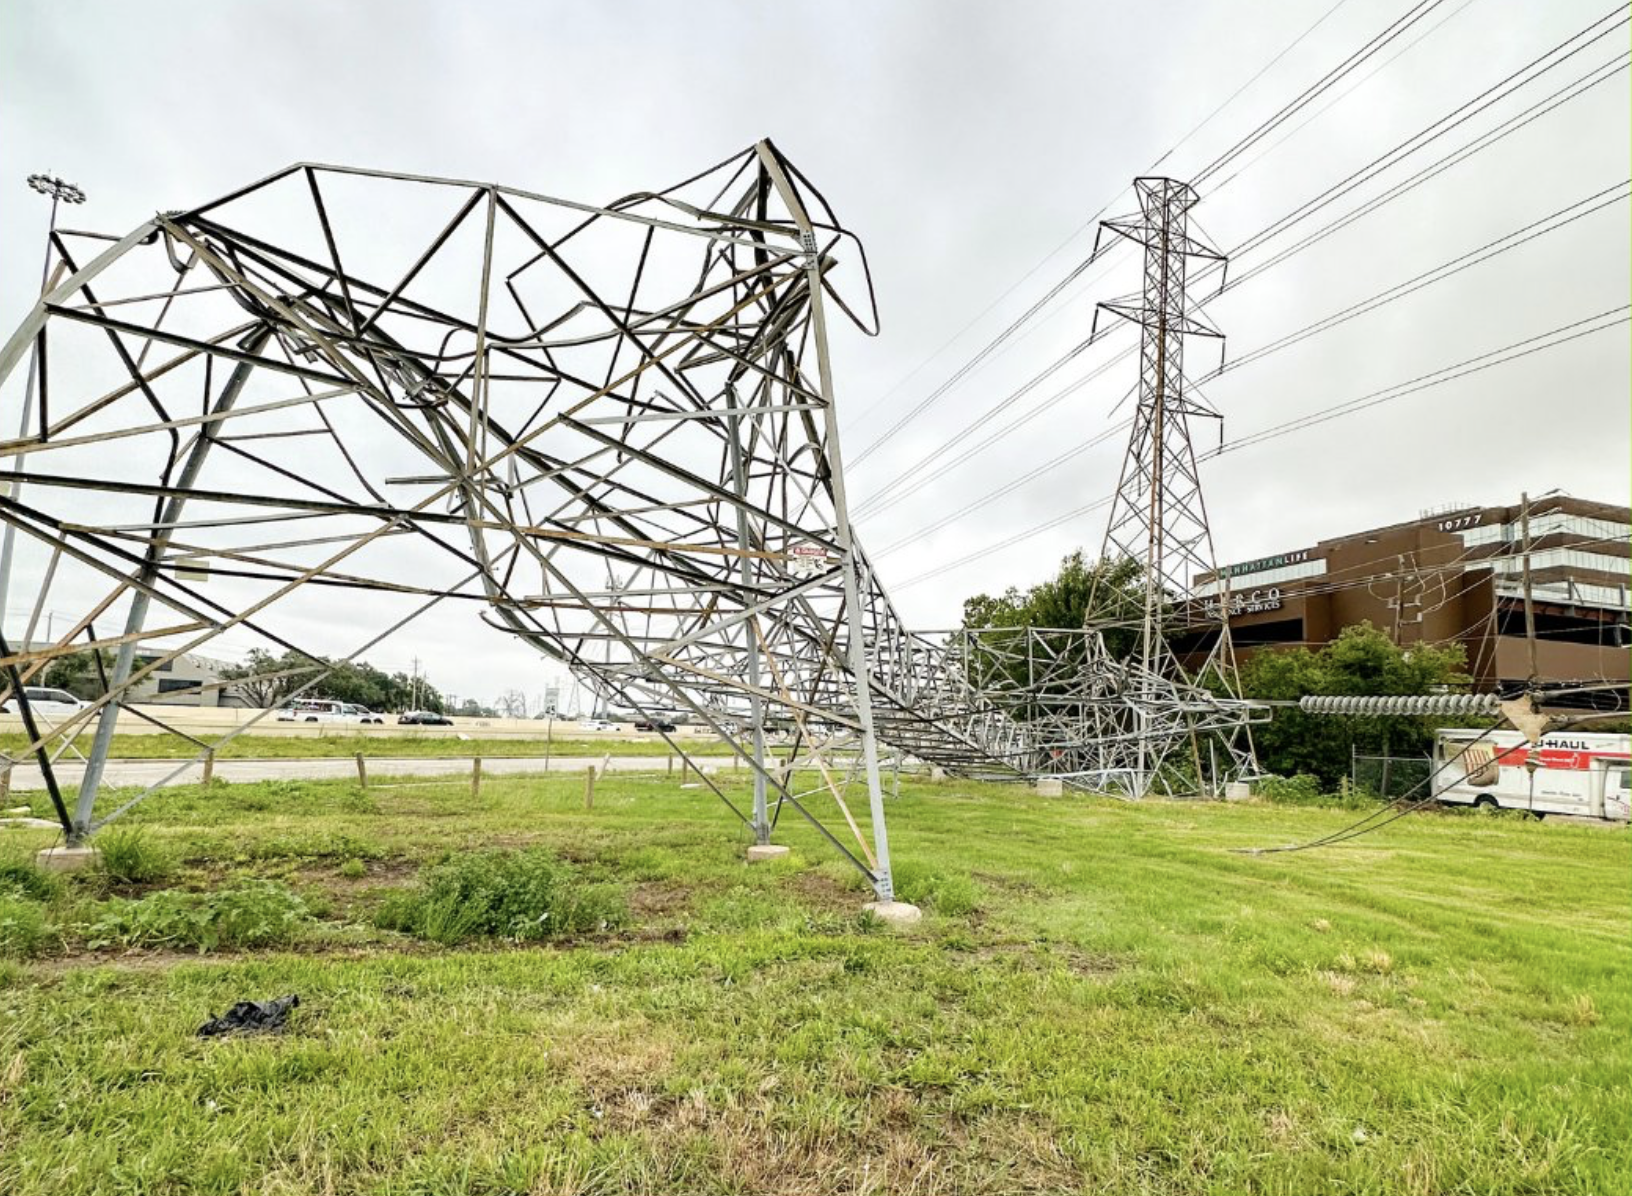 Derecho electricity impact